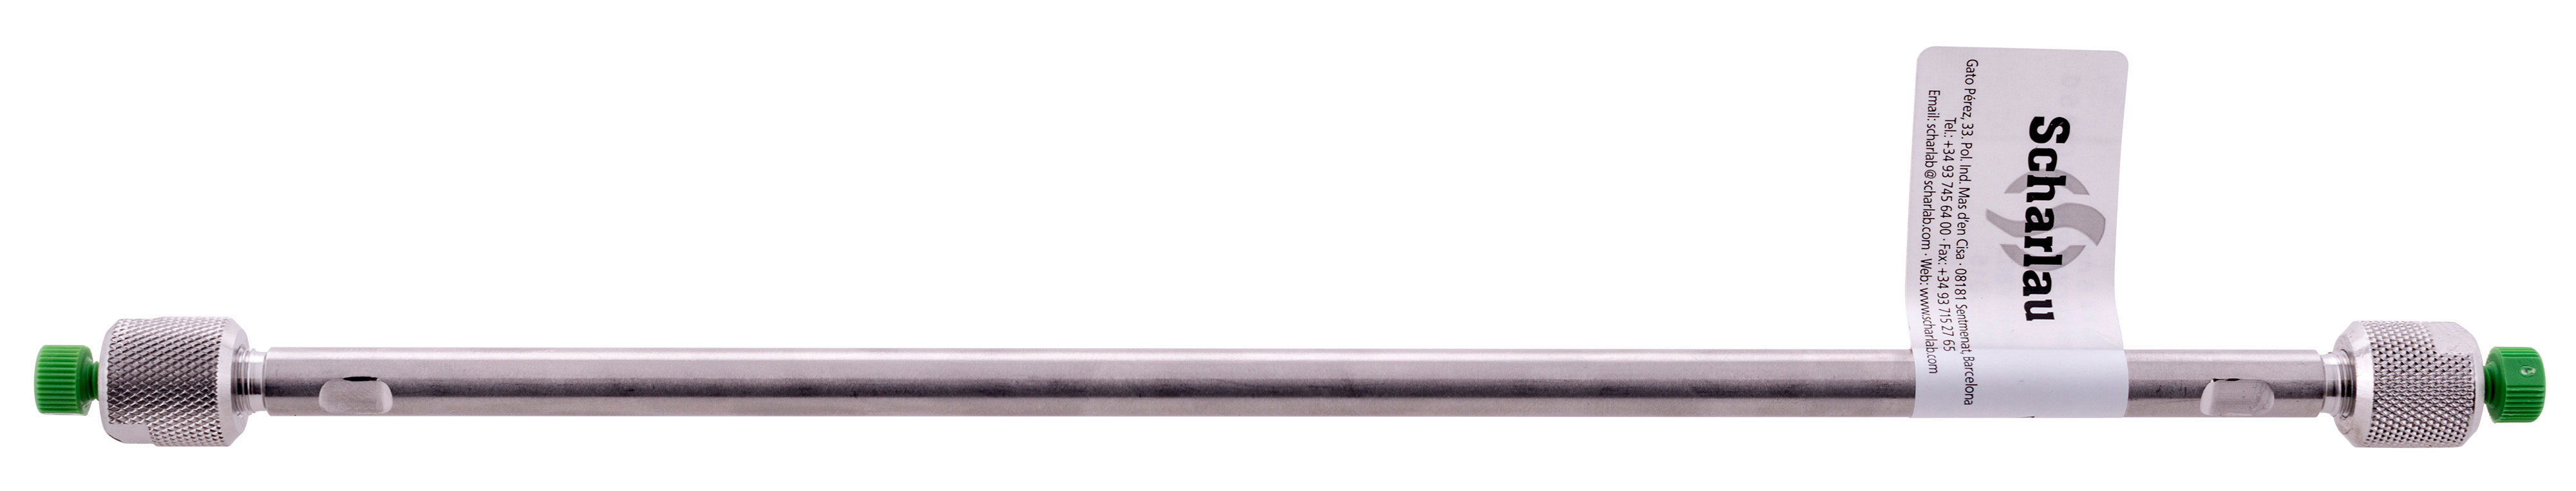 Columna KromaPhase 4,6mm D.I. SCHARLAU. Fase: SIL. Tamaño de particula (µm): 3,5. Tamaño de poro (Å): 100. Longitud (mm): 250. Diámetro interno (mm): 4,6